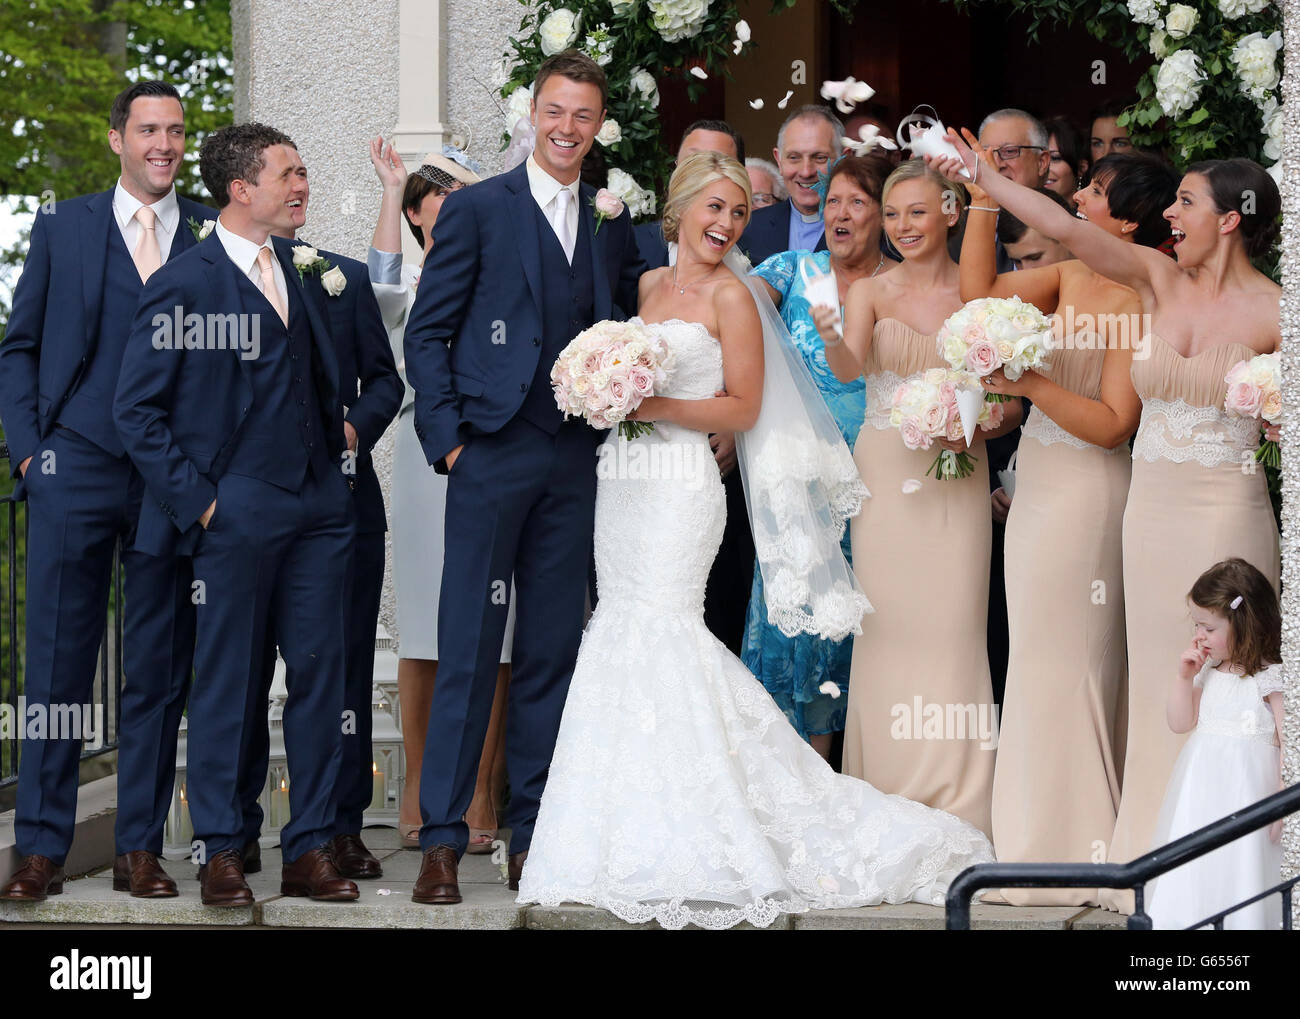 Jonny Evans wedding Stock Photo